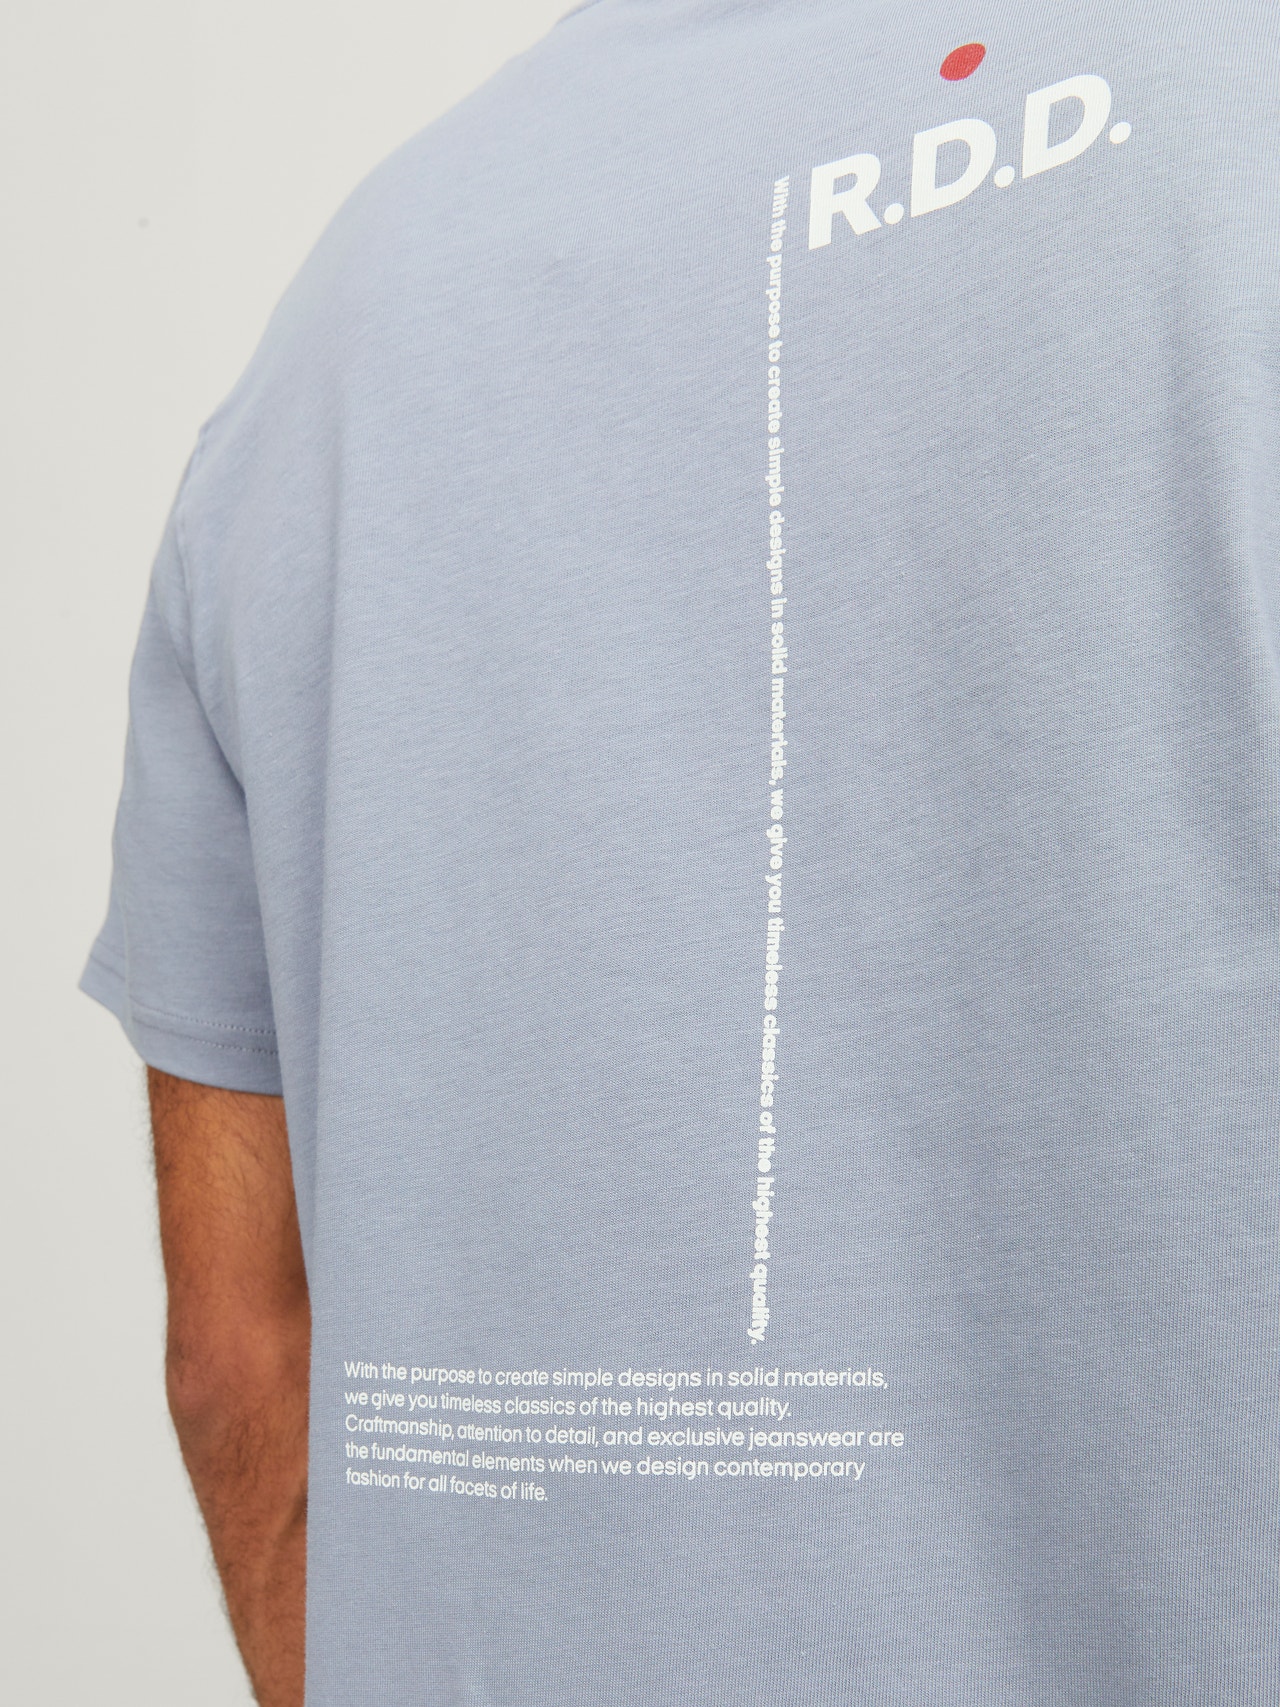 Jack & Jones RDD Printet Crew neck T-shirt -Tradewinds - 12252153